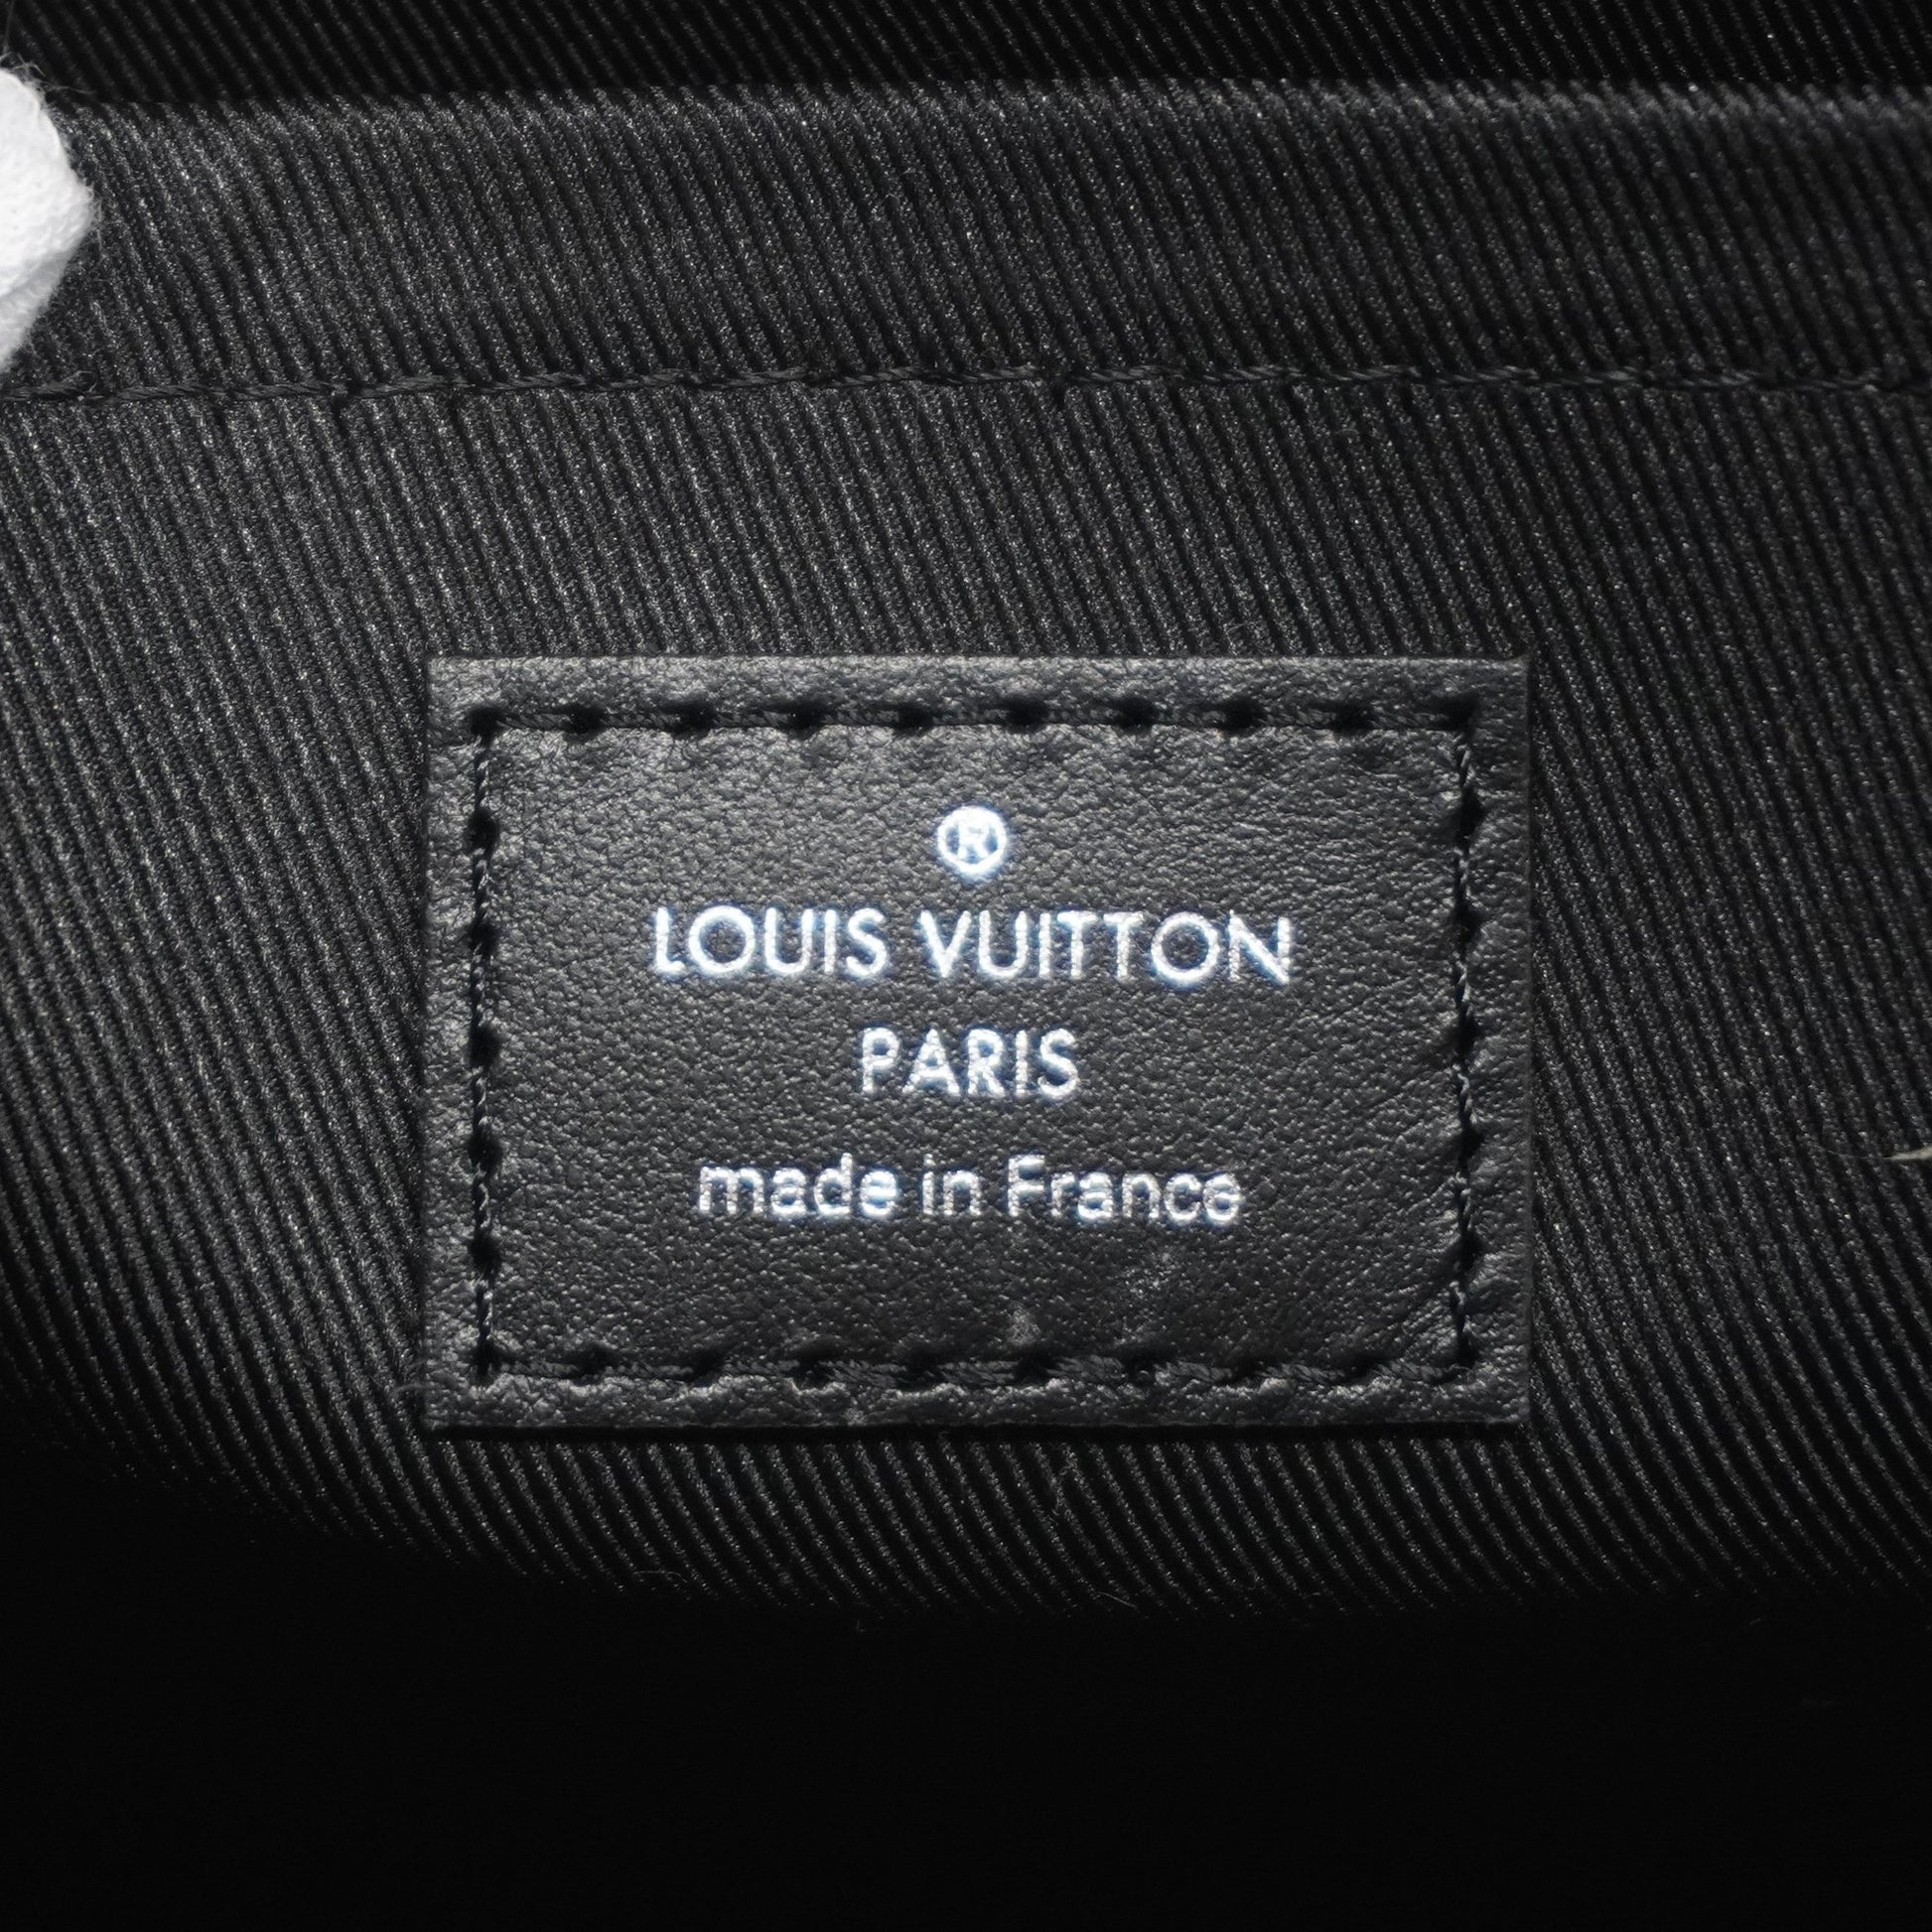 Túi đeo chéo Louis Vuitton City Keepall Bag M45936